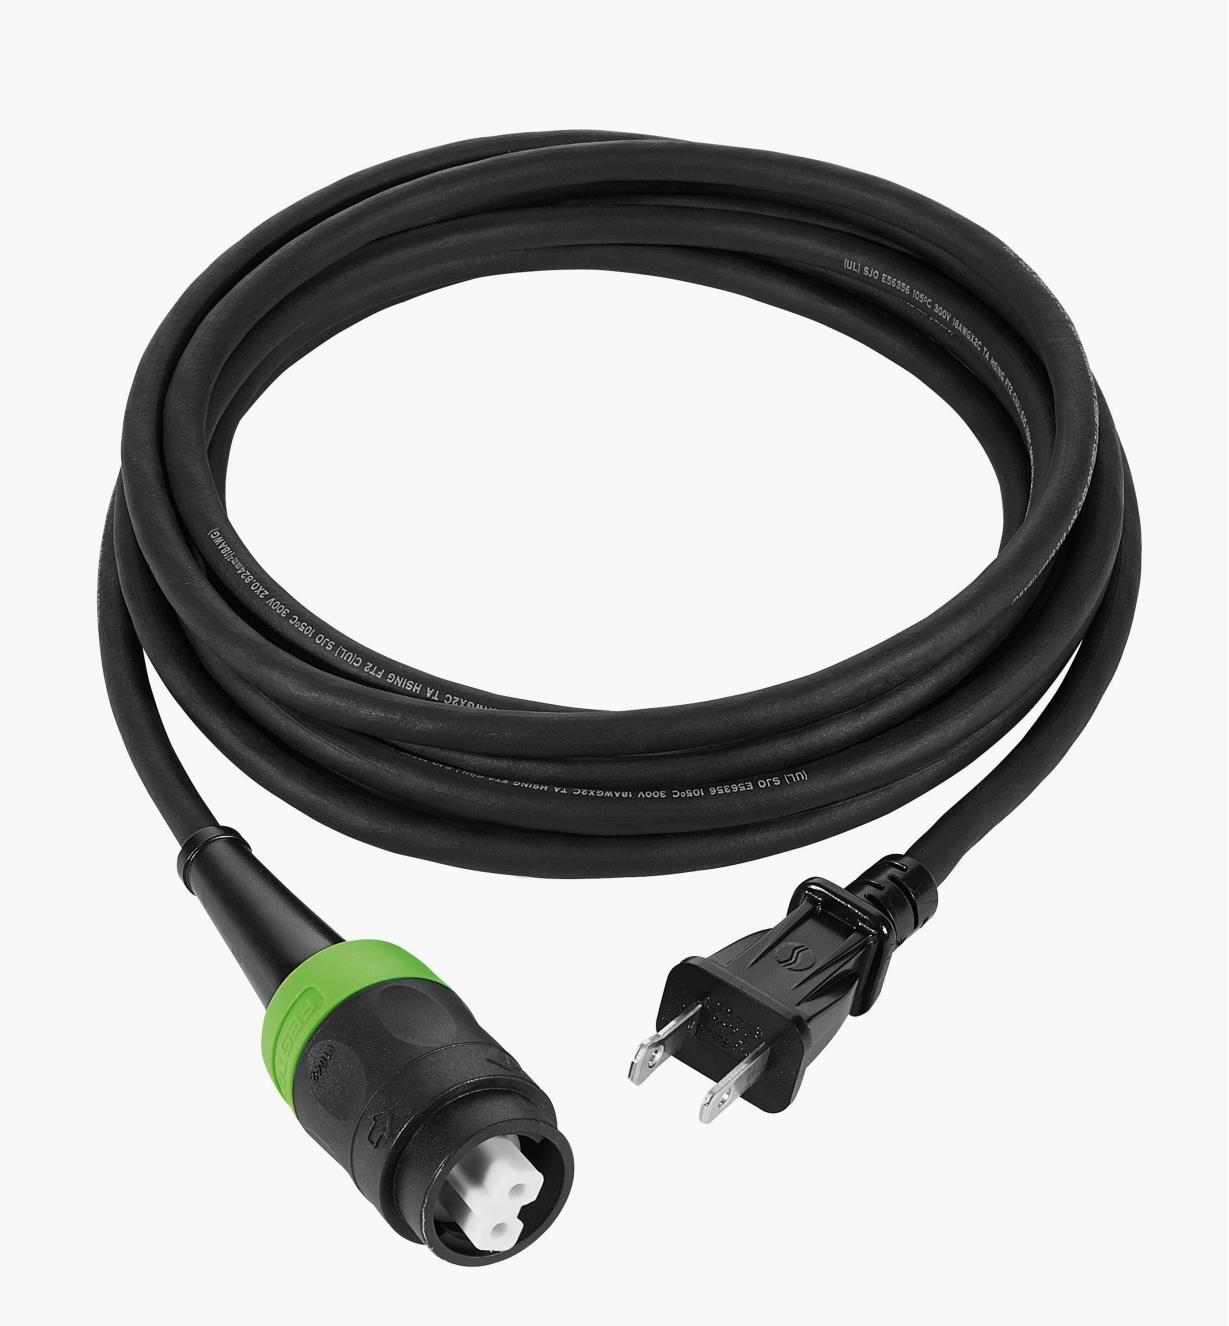 Plug-it Power Cord SJO 16 AWG-4